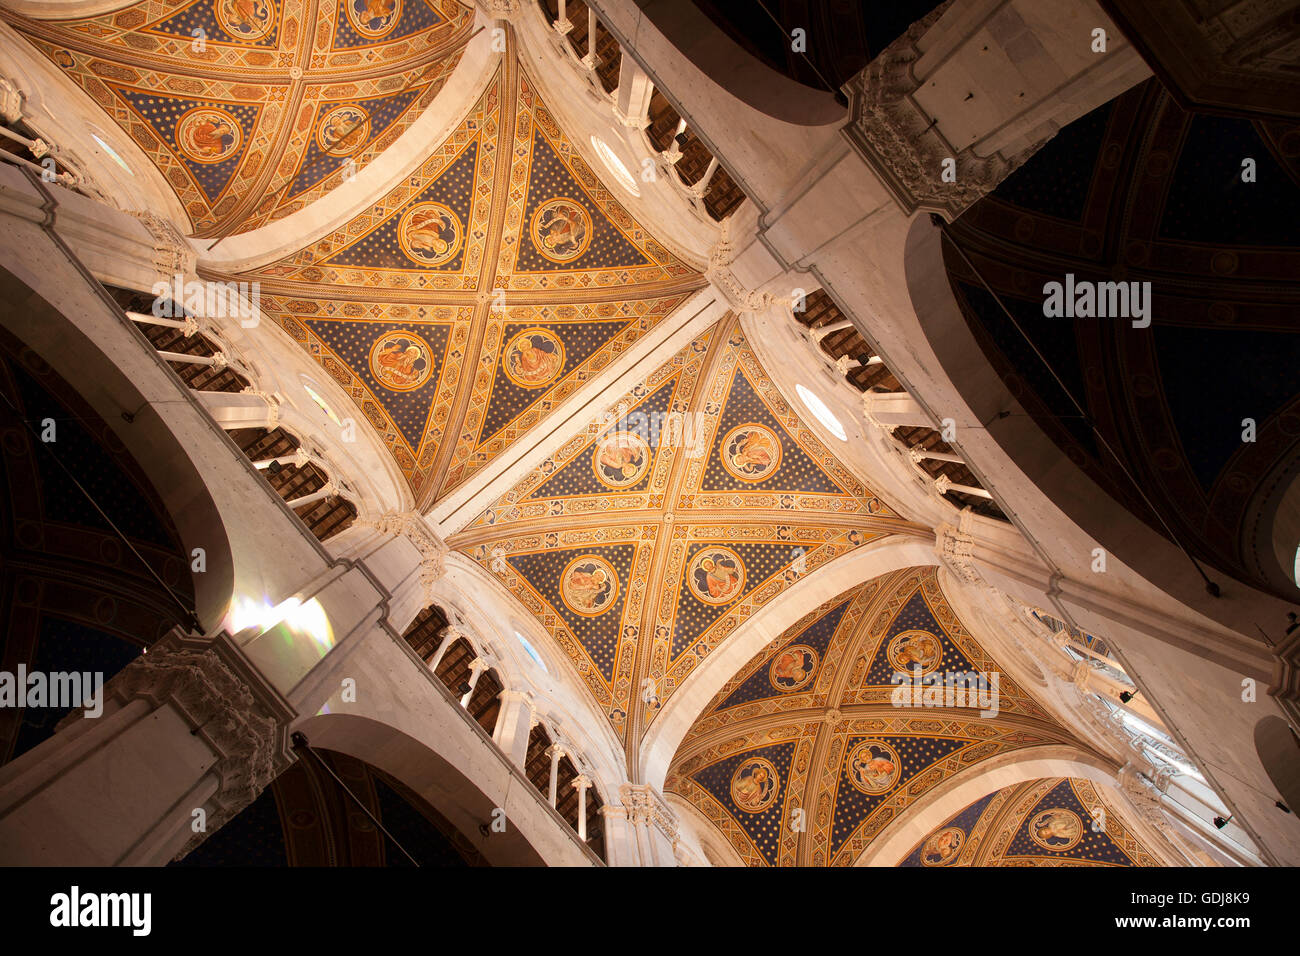 Duomo San Martino Cathedral Church, Lucca, Tuscany, Italy Stock Photo